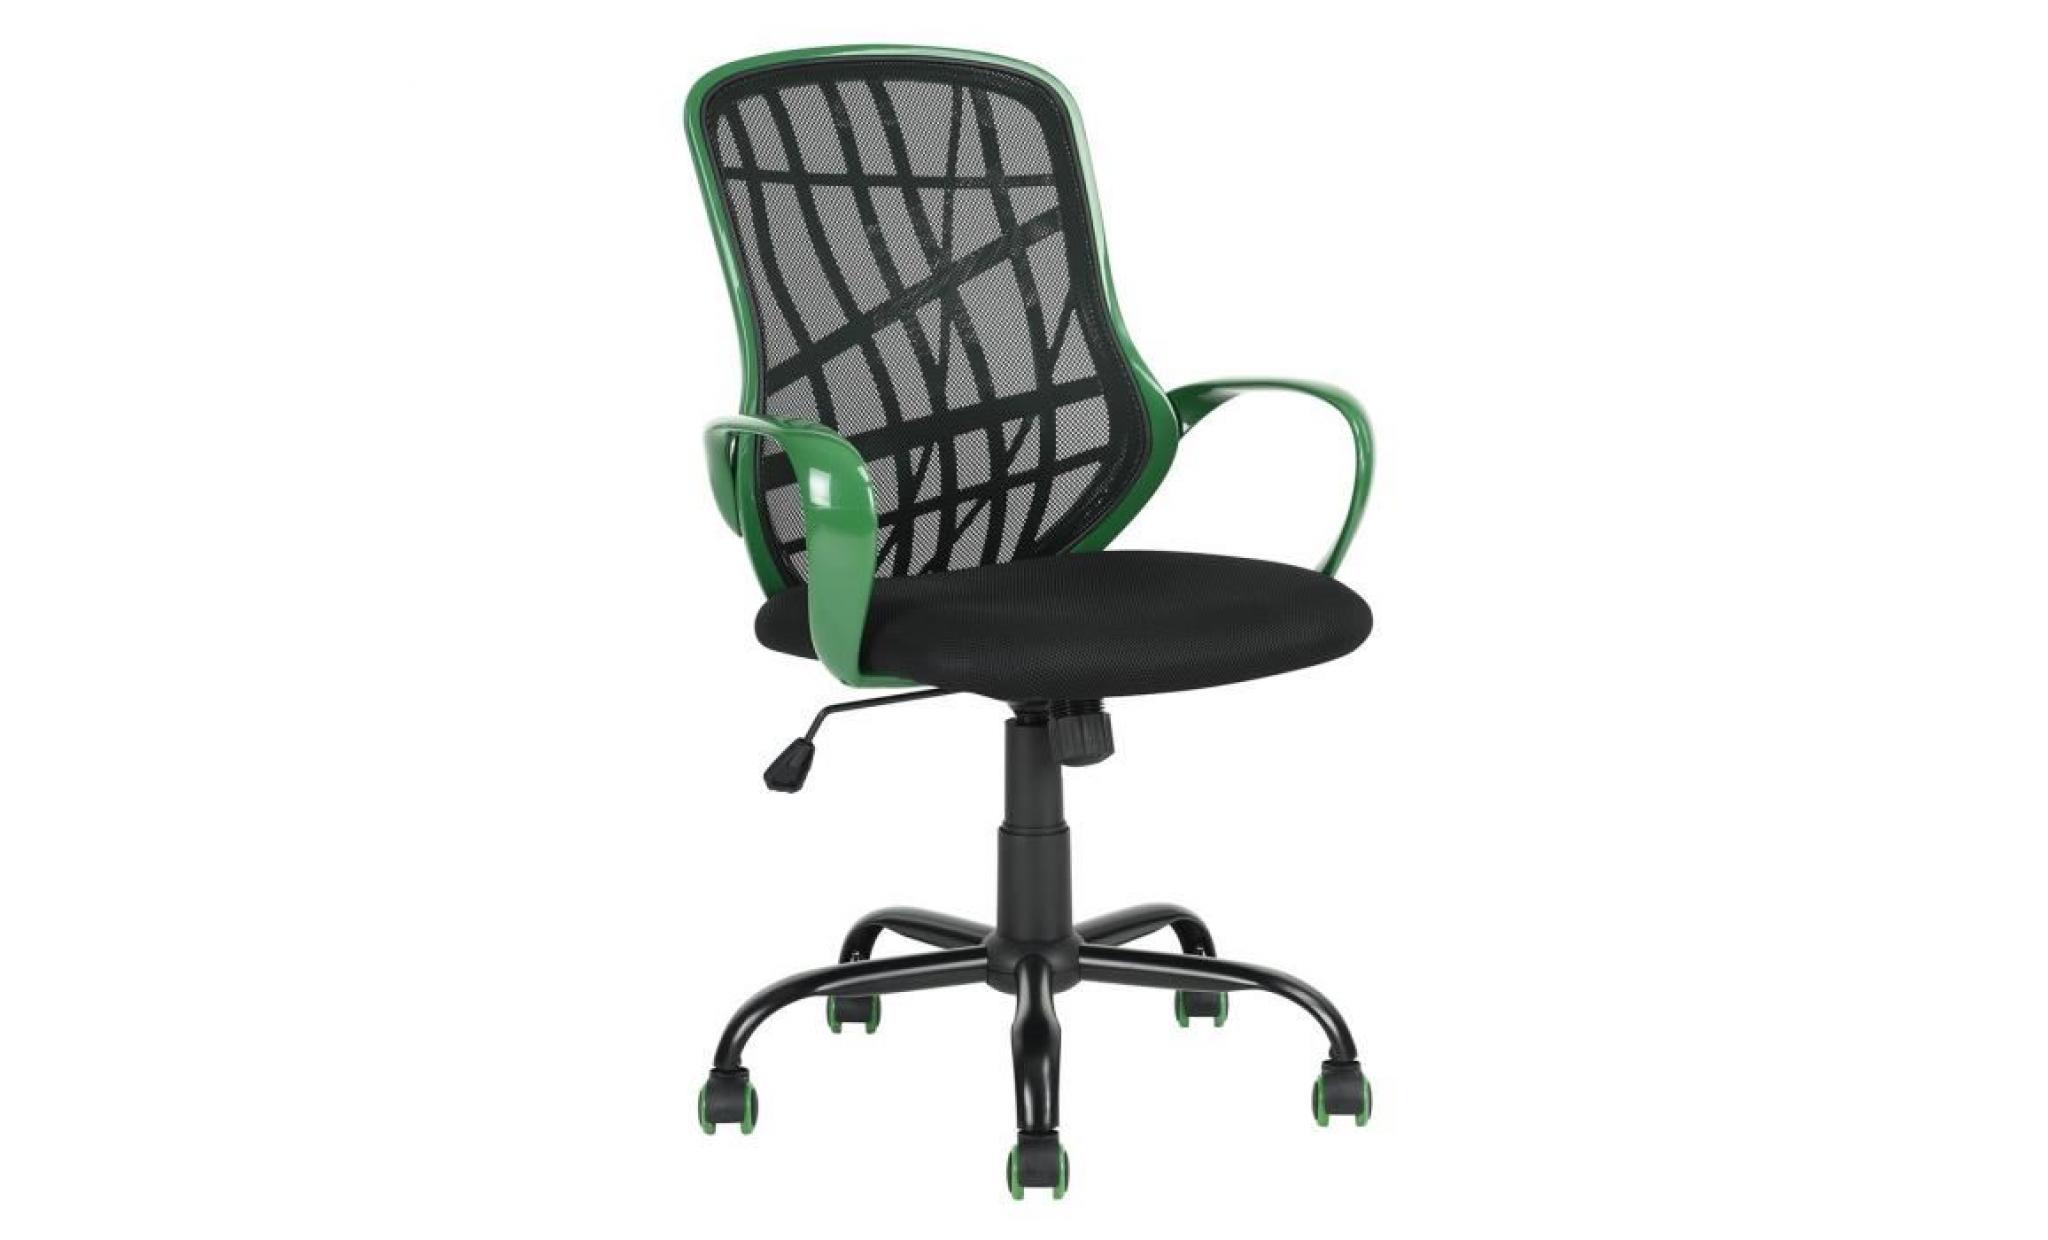 fauteuil de bureau vert avec dossier ergonomique en tissu respirant accoudoir en plastique,marque homy casa